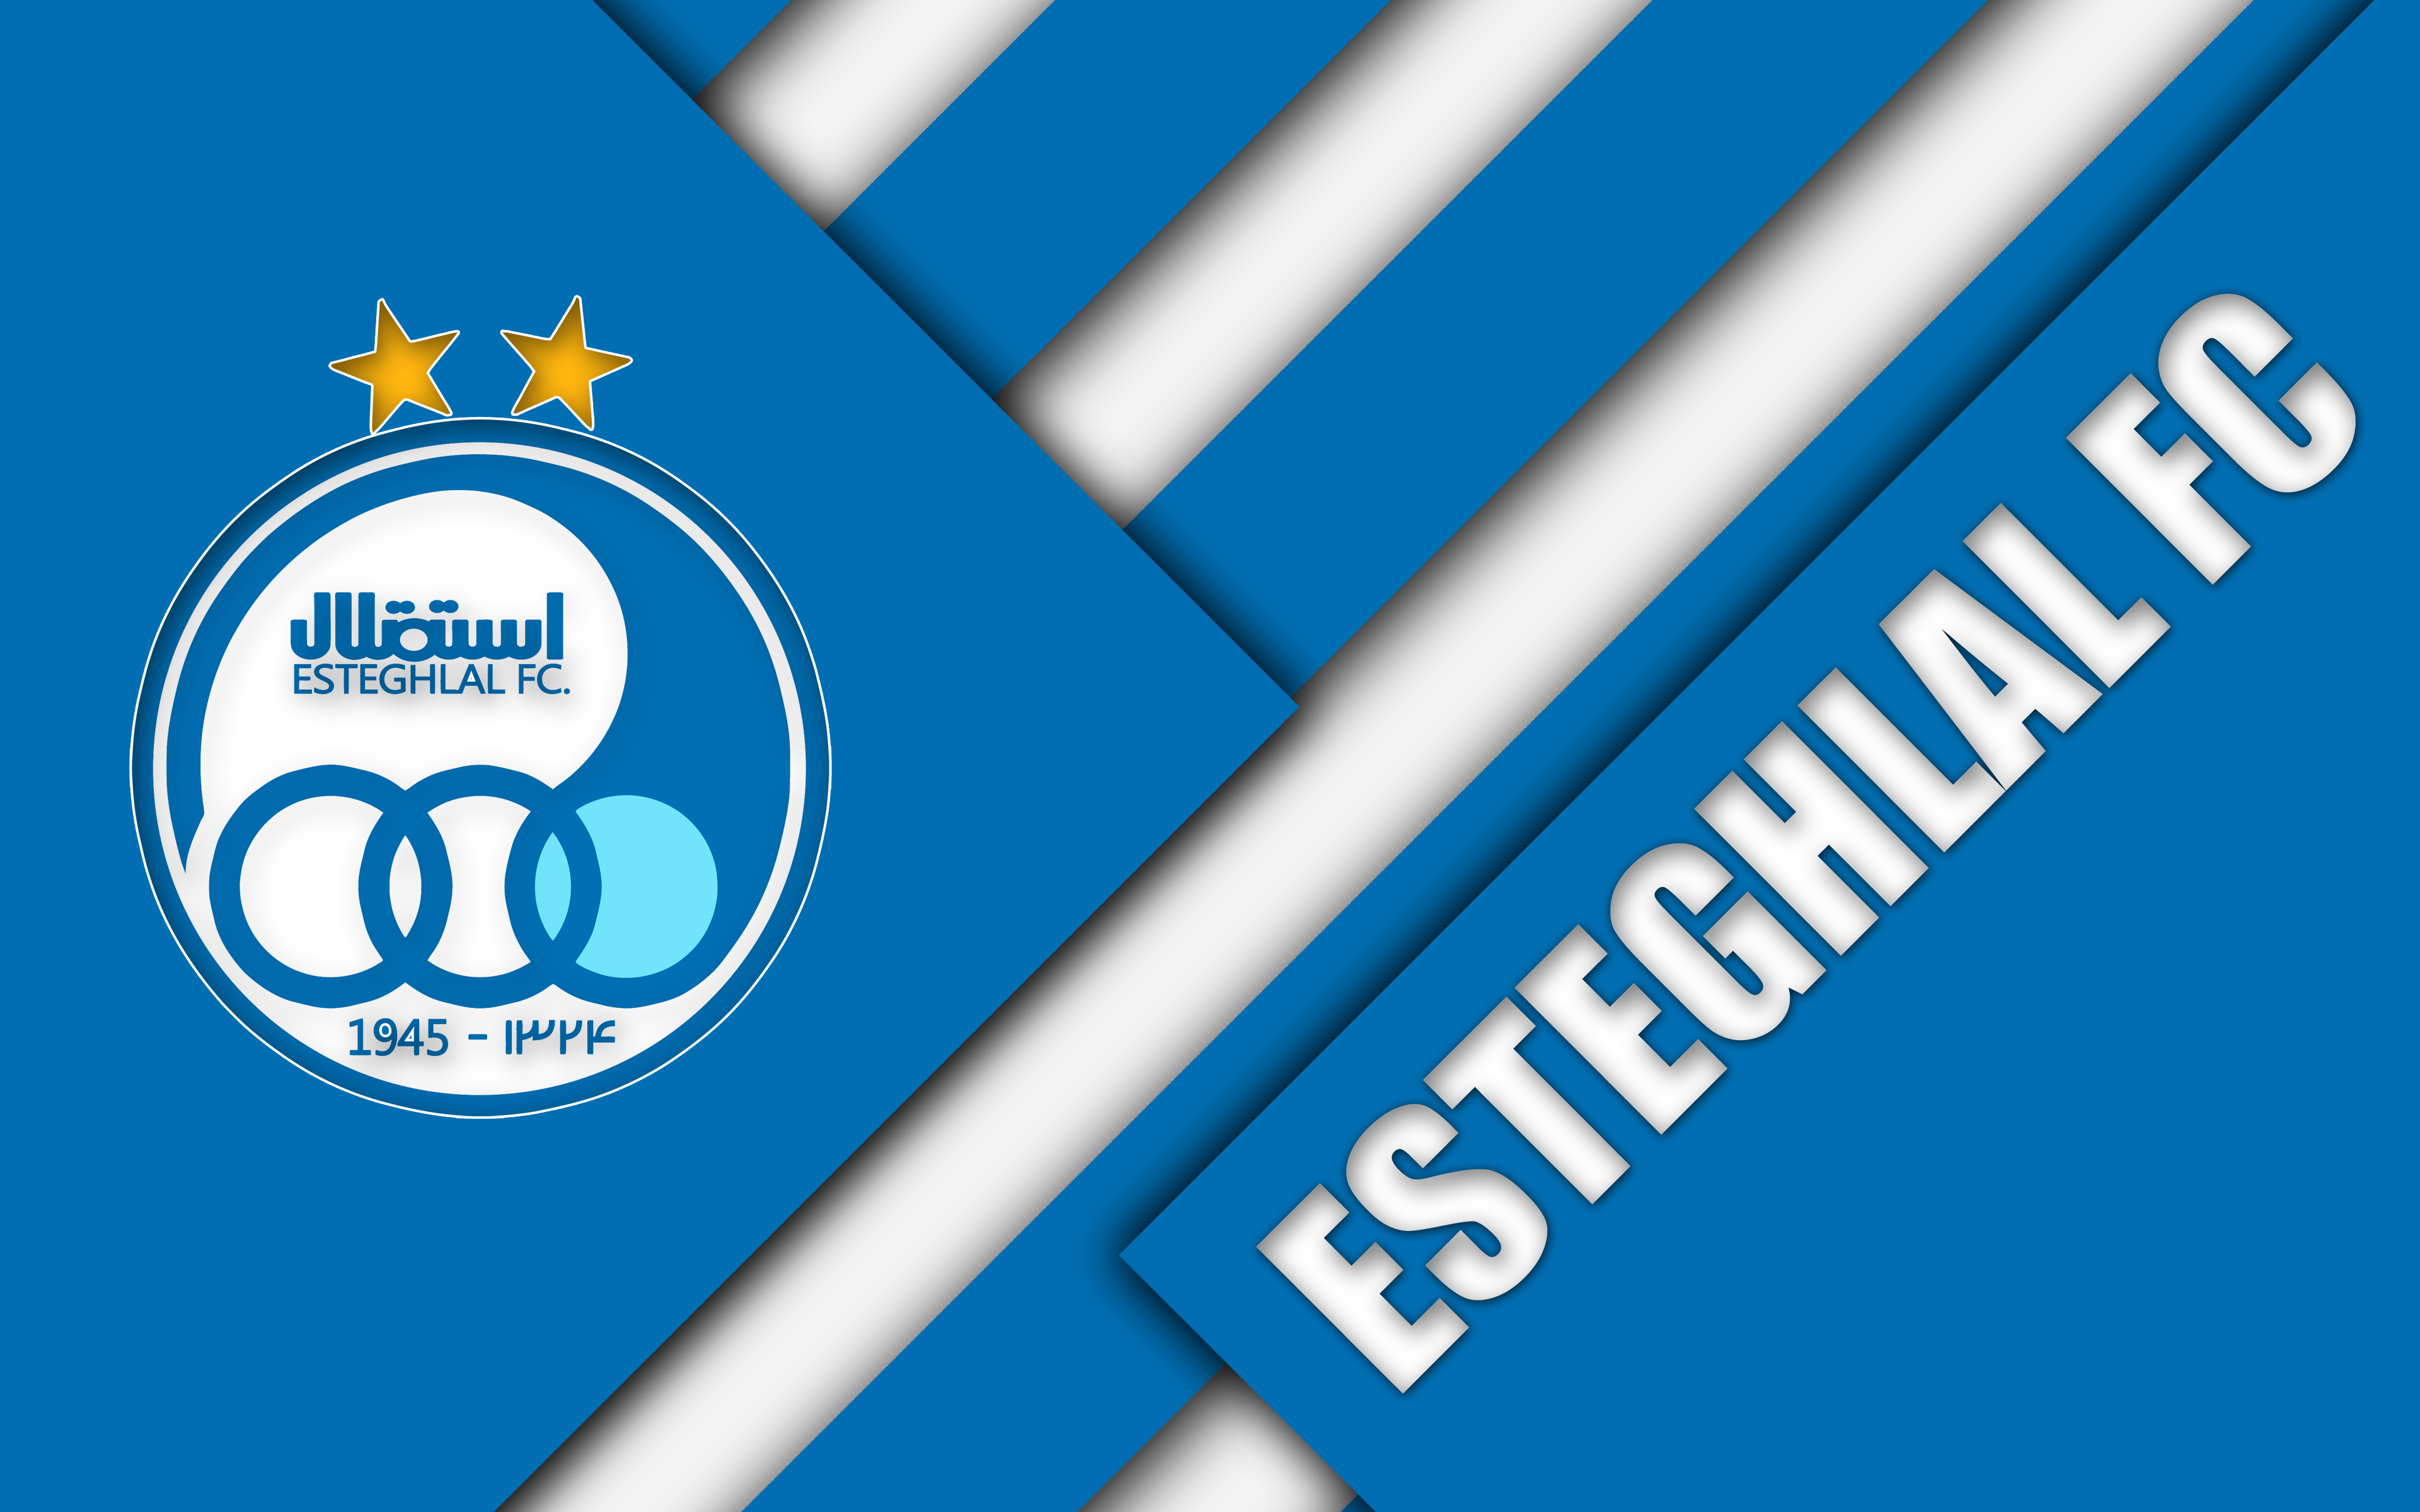 sports, esteghlal f c, emblem, logo, soccer